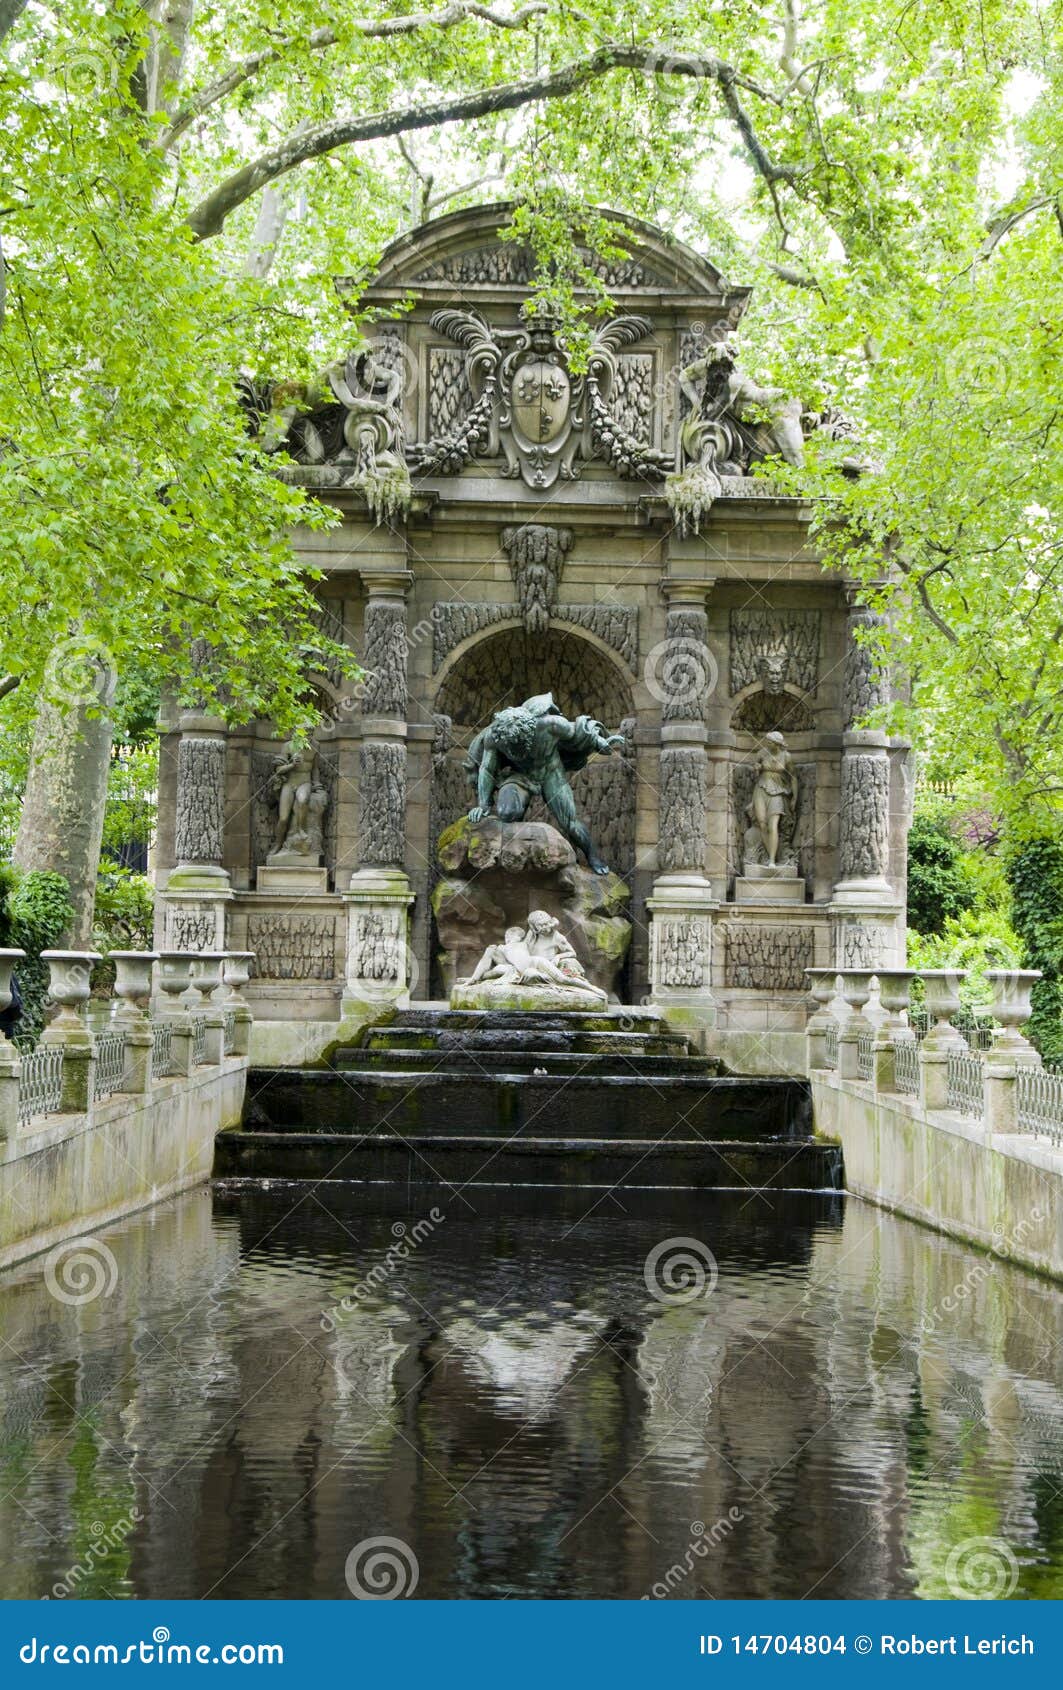 medici fountain luxembourg gardens paris